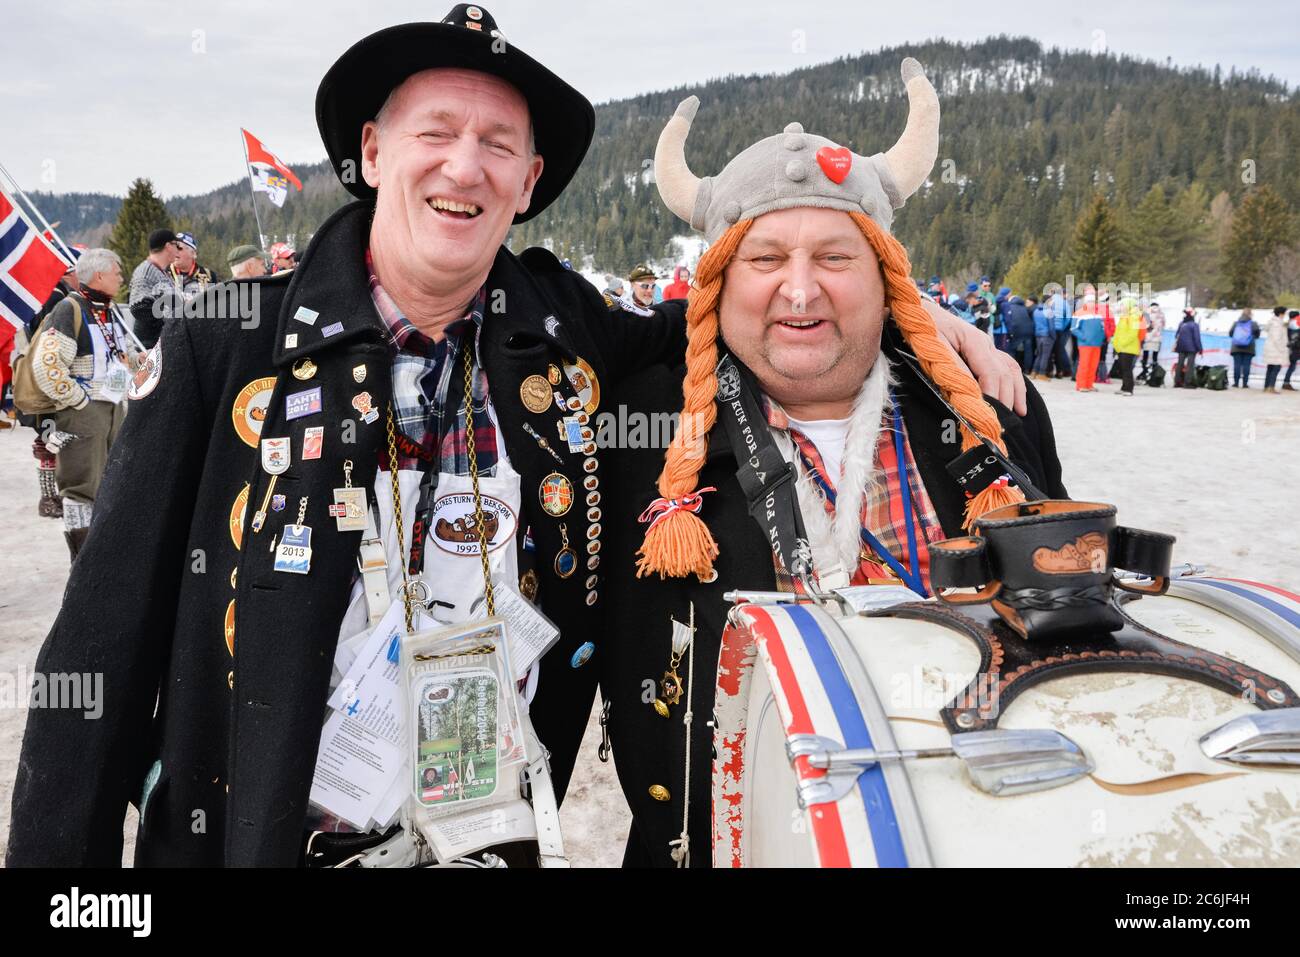 Norwegian ski fans at the Nordic World Championships, Seefeld, Austria, 2019. Stock Photo